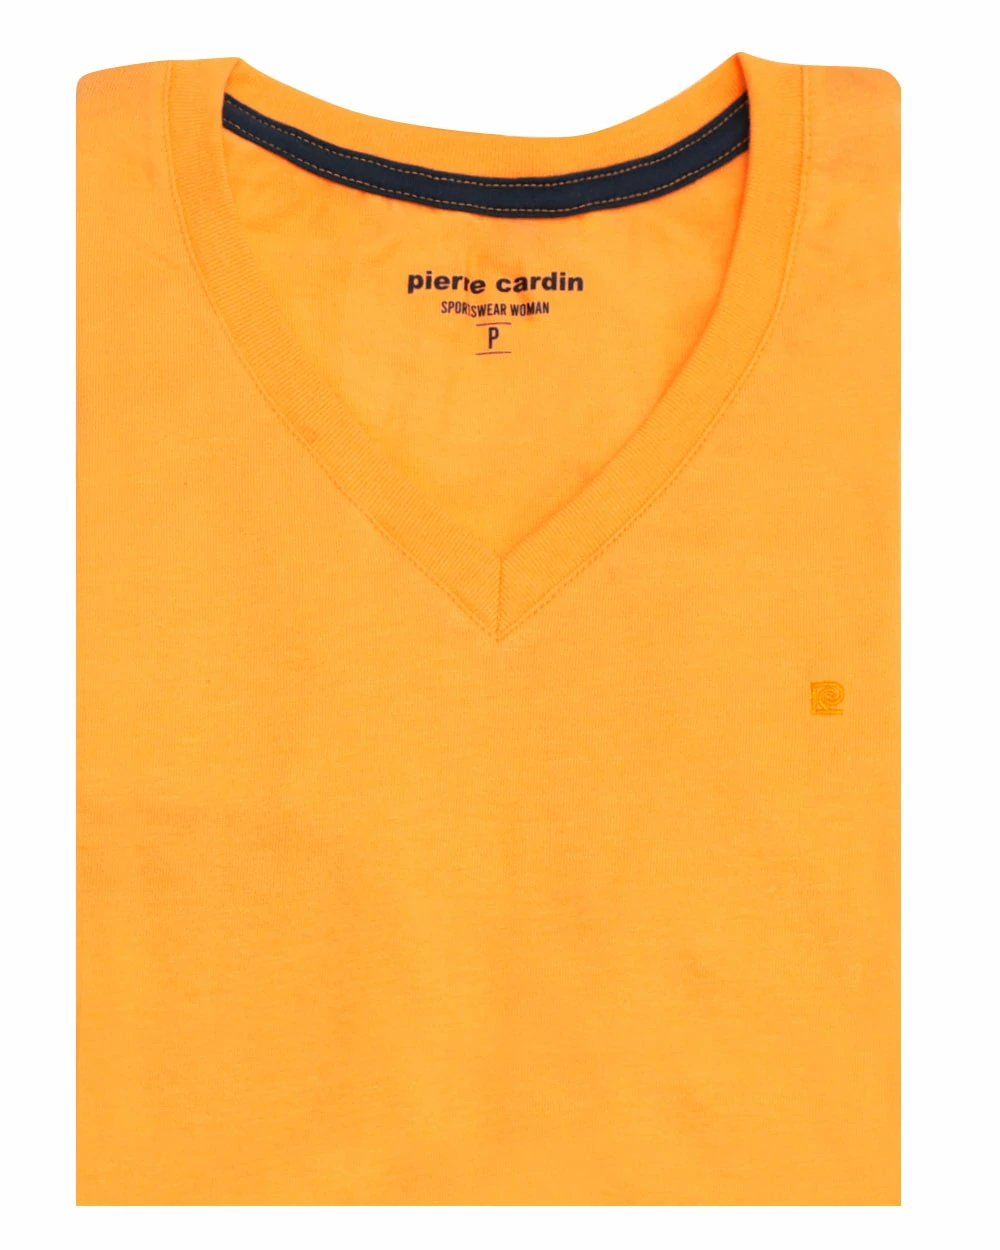 Camiseta lisa cuello v manga corta amarilla